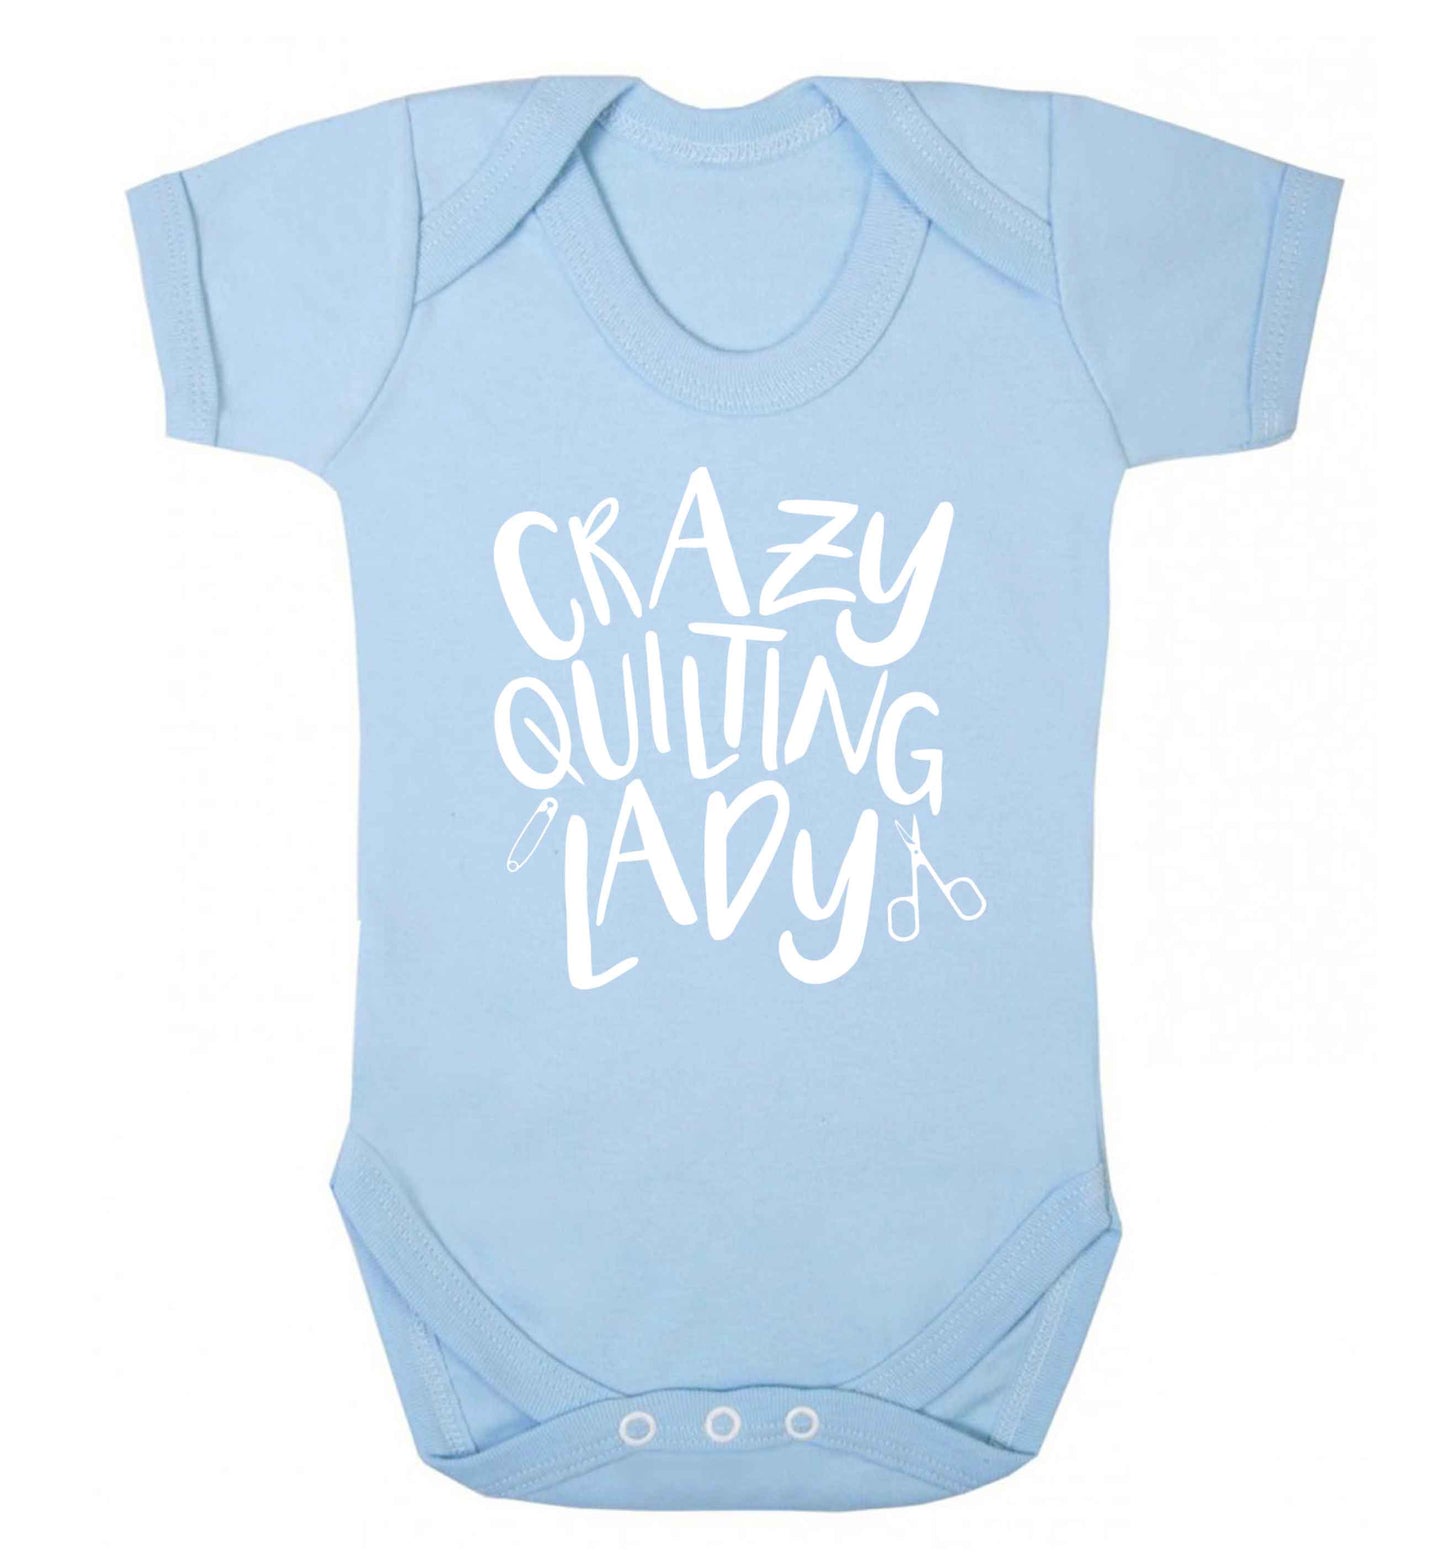 Crazy quilting lady Baby Vest pale blue 18-24 months